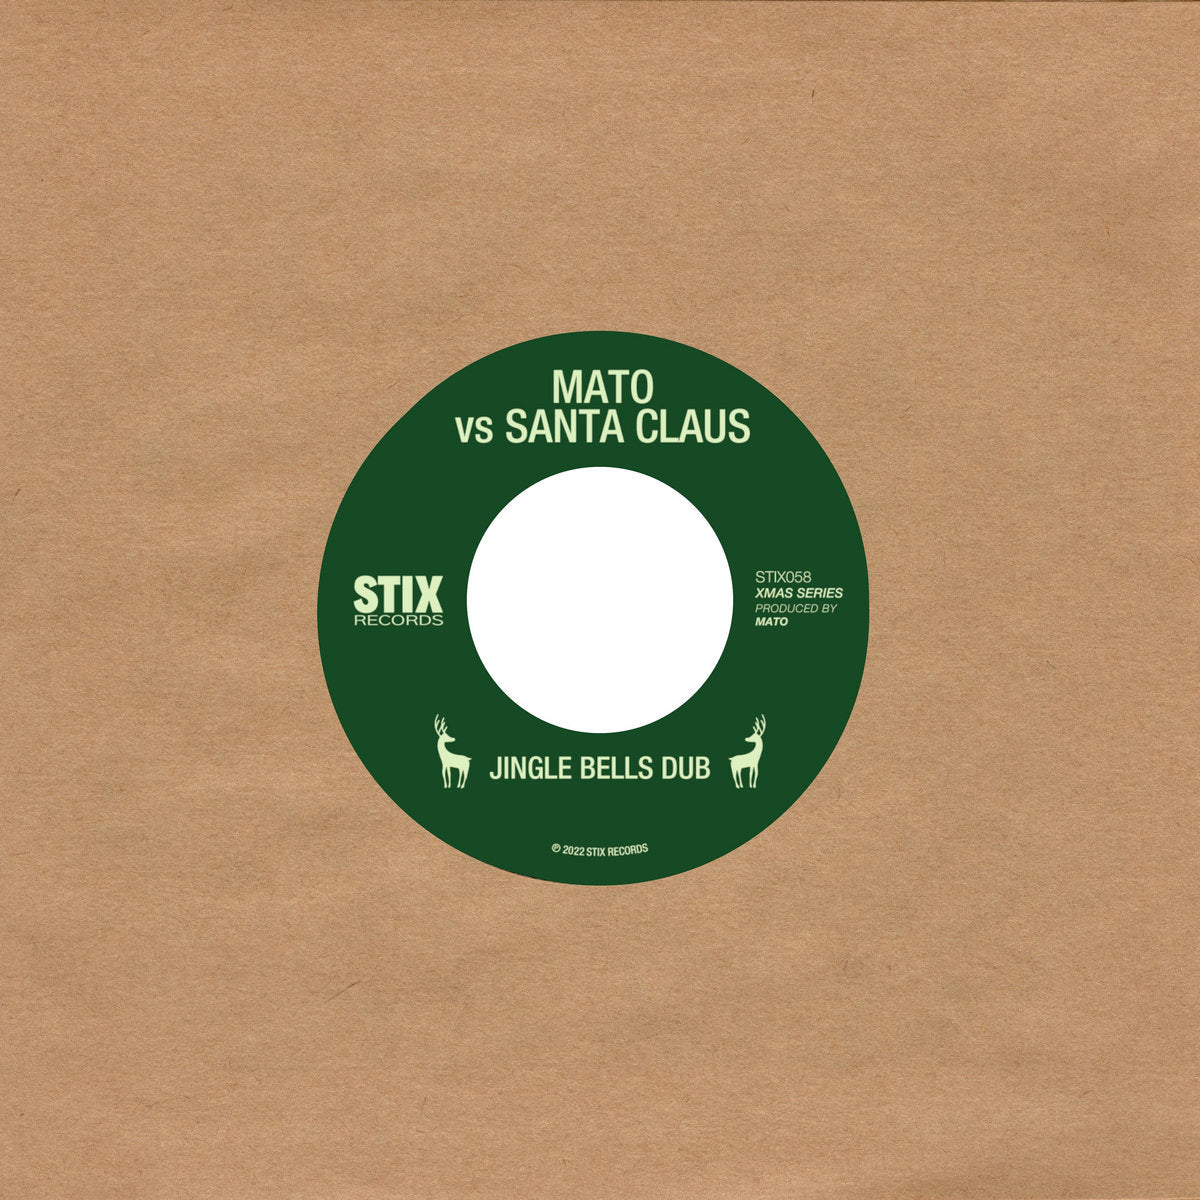 Mato vs Santa Claus - Jingle Bells Dub/Sleigh Ride Dub 7" (Red vinyl)